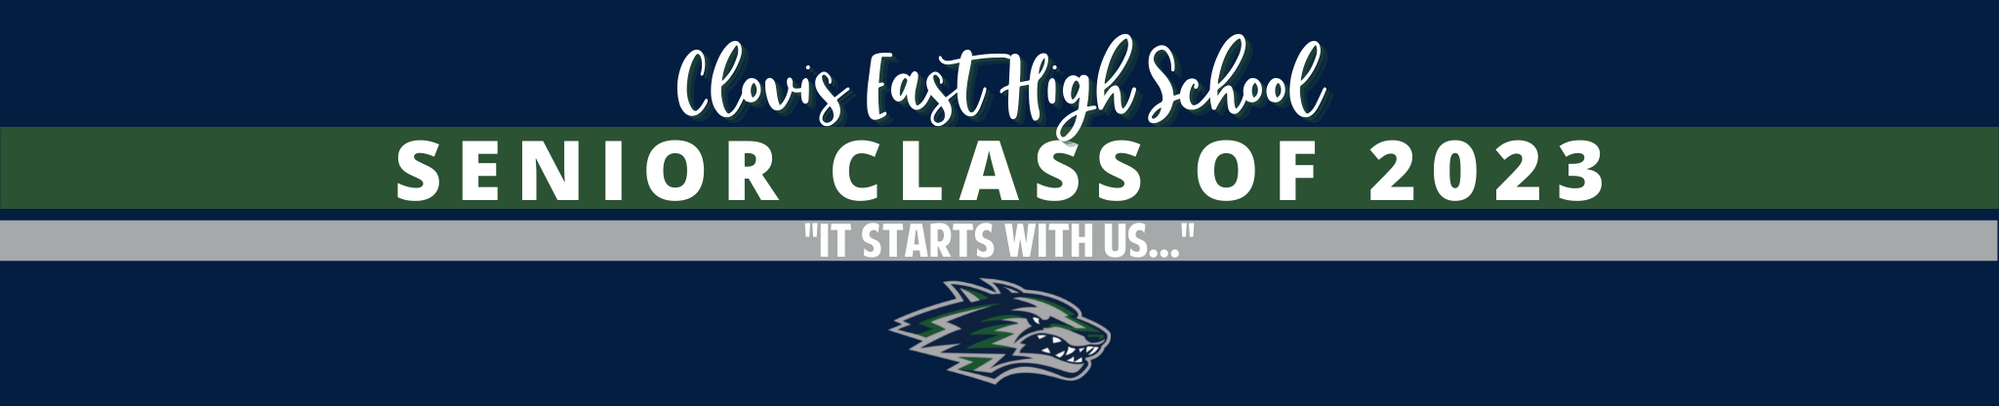 Clovis East High School - Senior Class of 2023 - "It starts with us..."